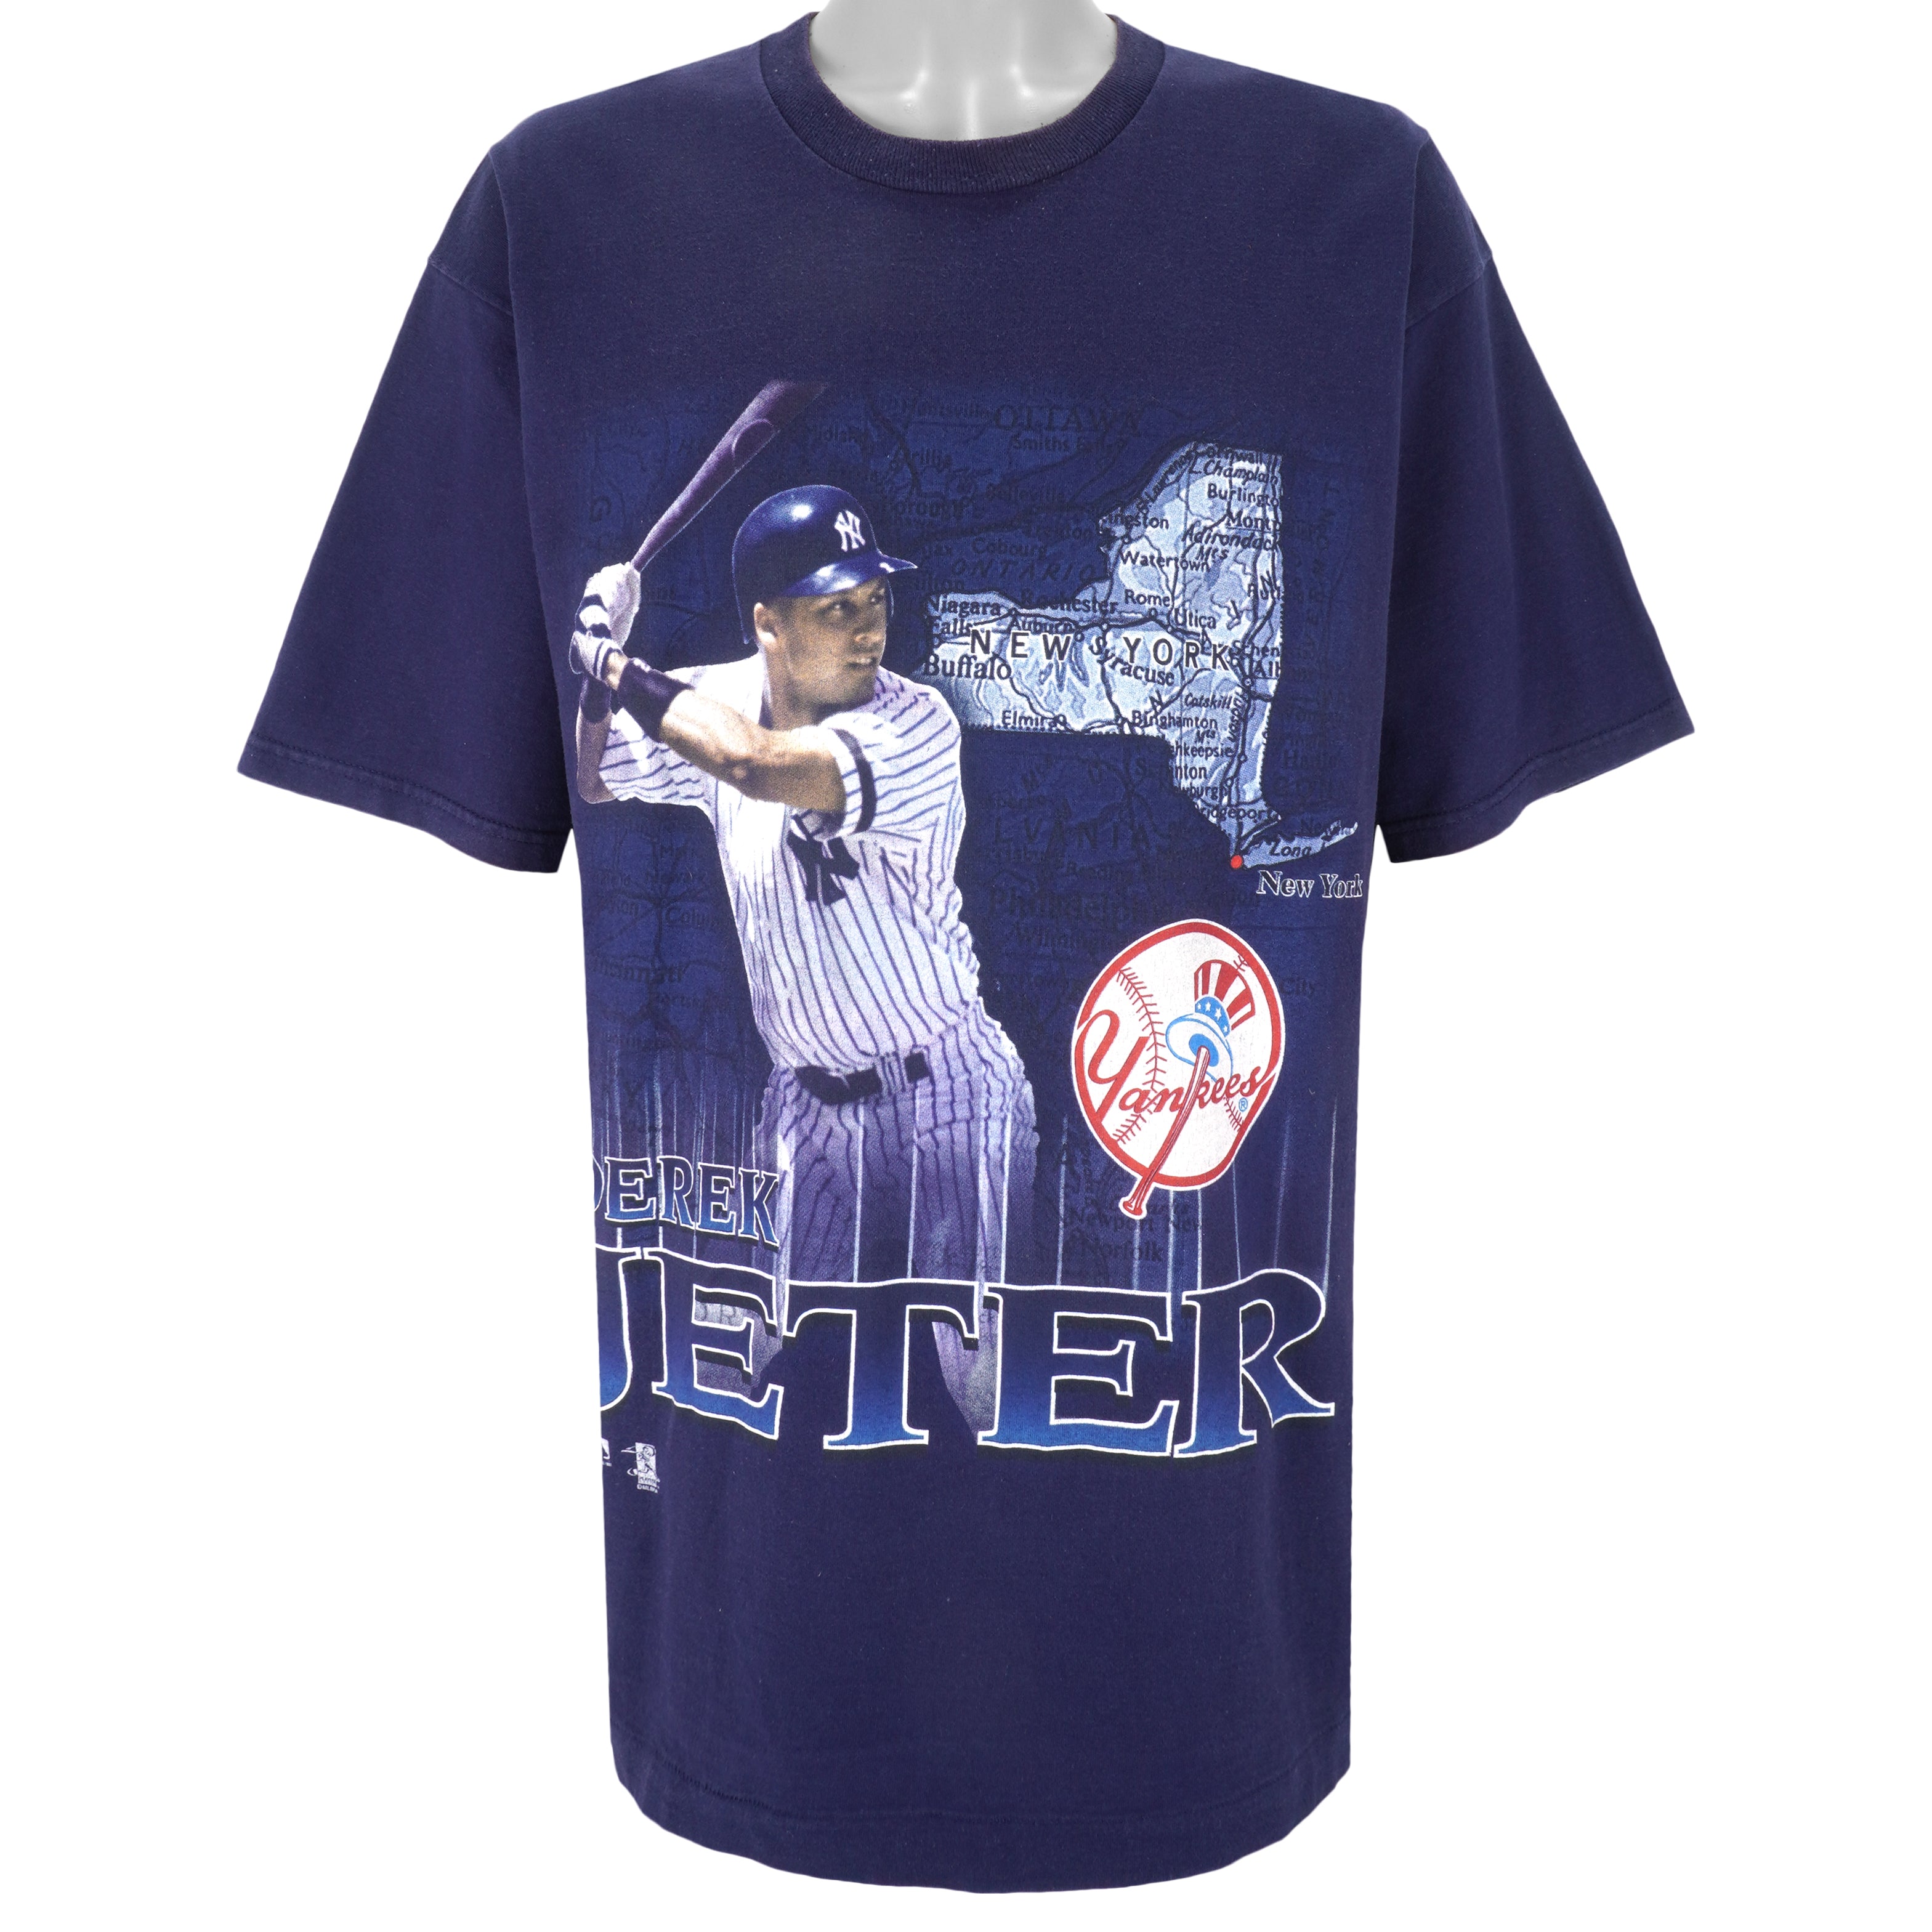 VTG 1997 Pro Player Derek Jeter Shirt Youth Size 14/16 Large New York  Yankees